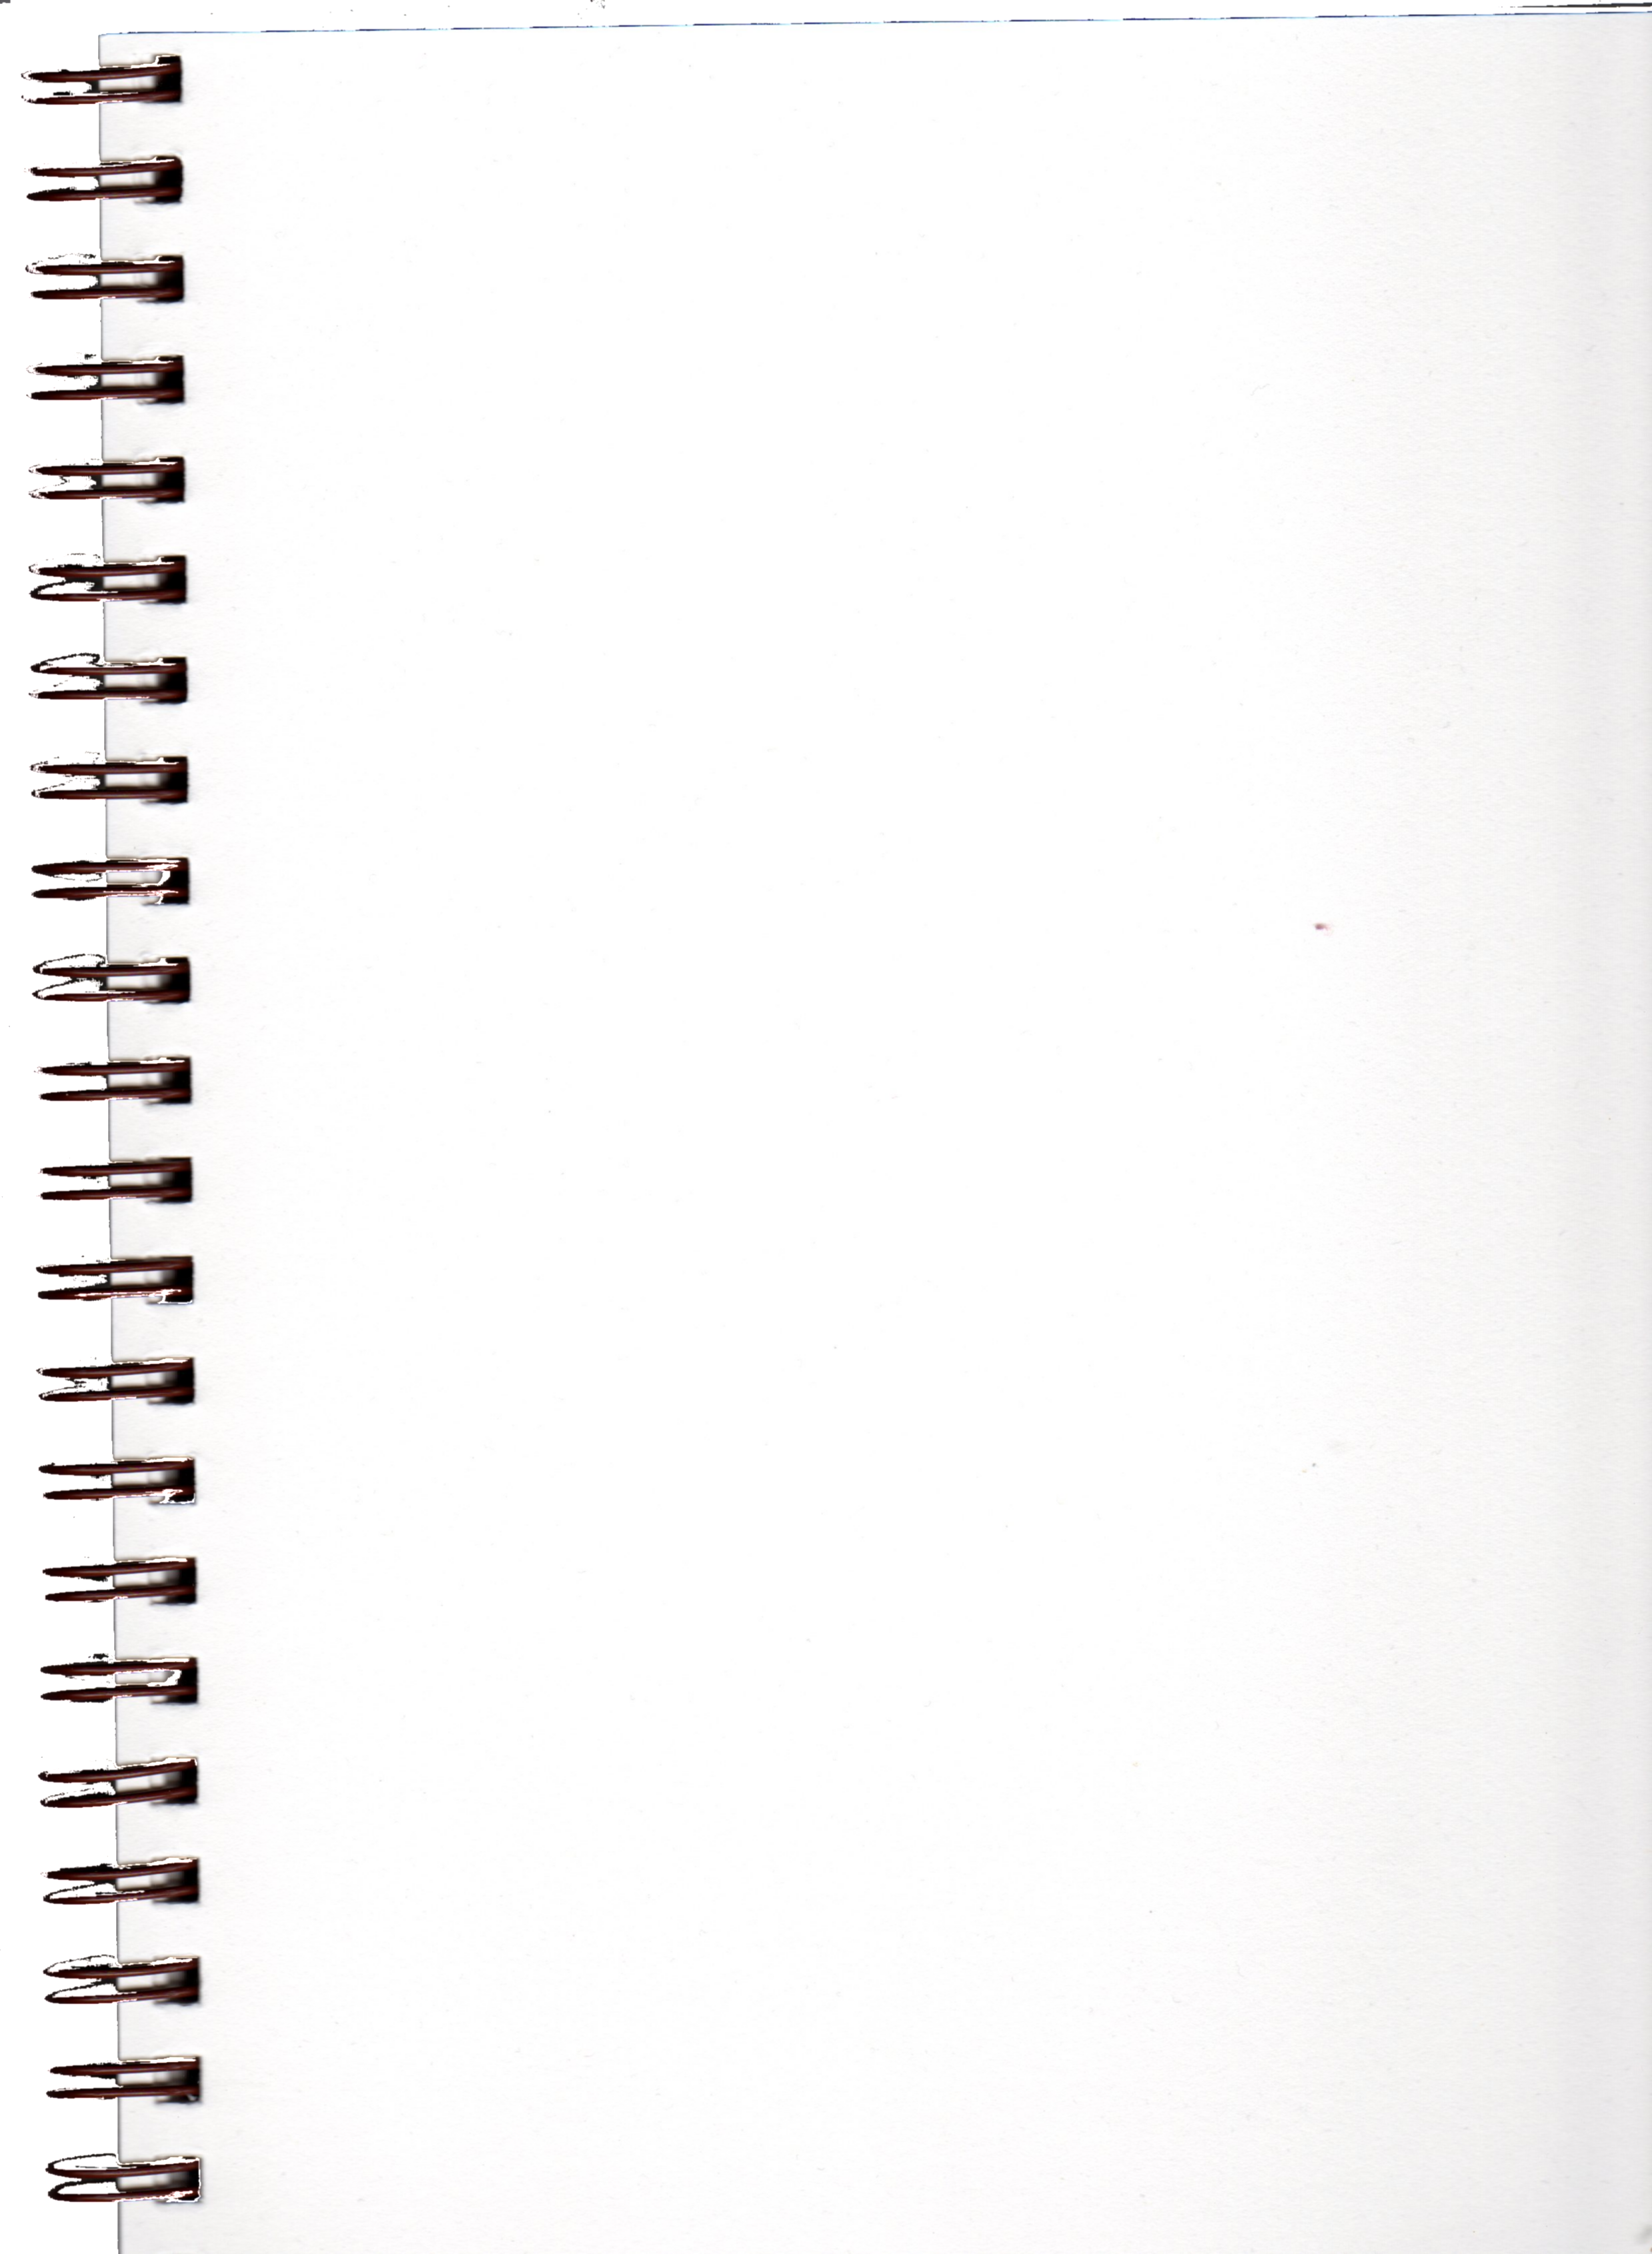 Pre-Cut Blank Spiral Notebook Page by Bnspyrd on DeviantArt